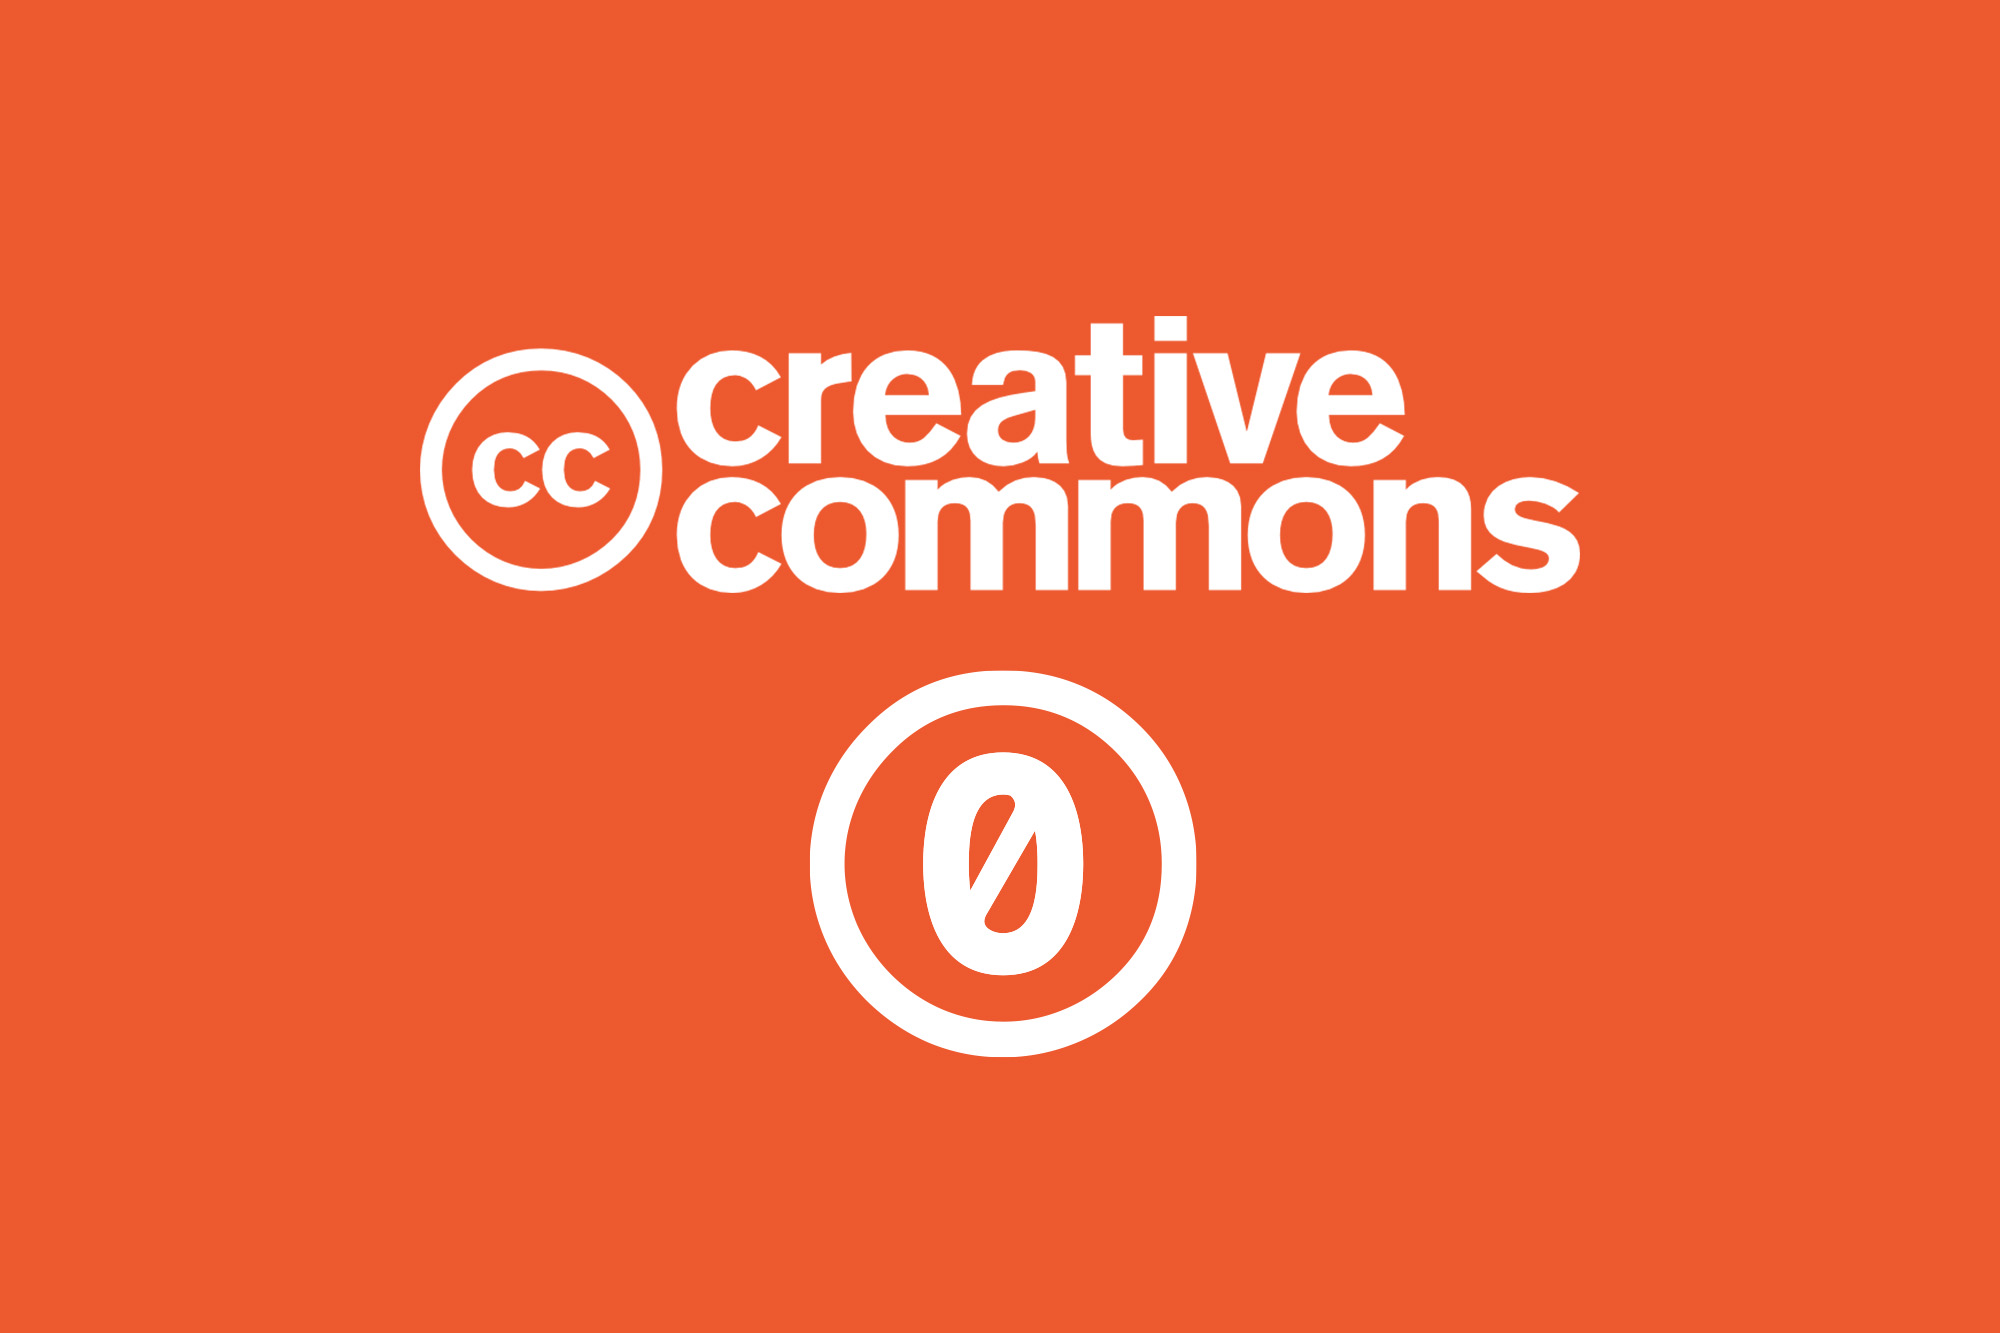 creative commons zero license in white on an orange background